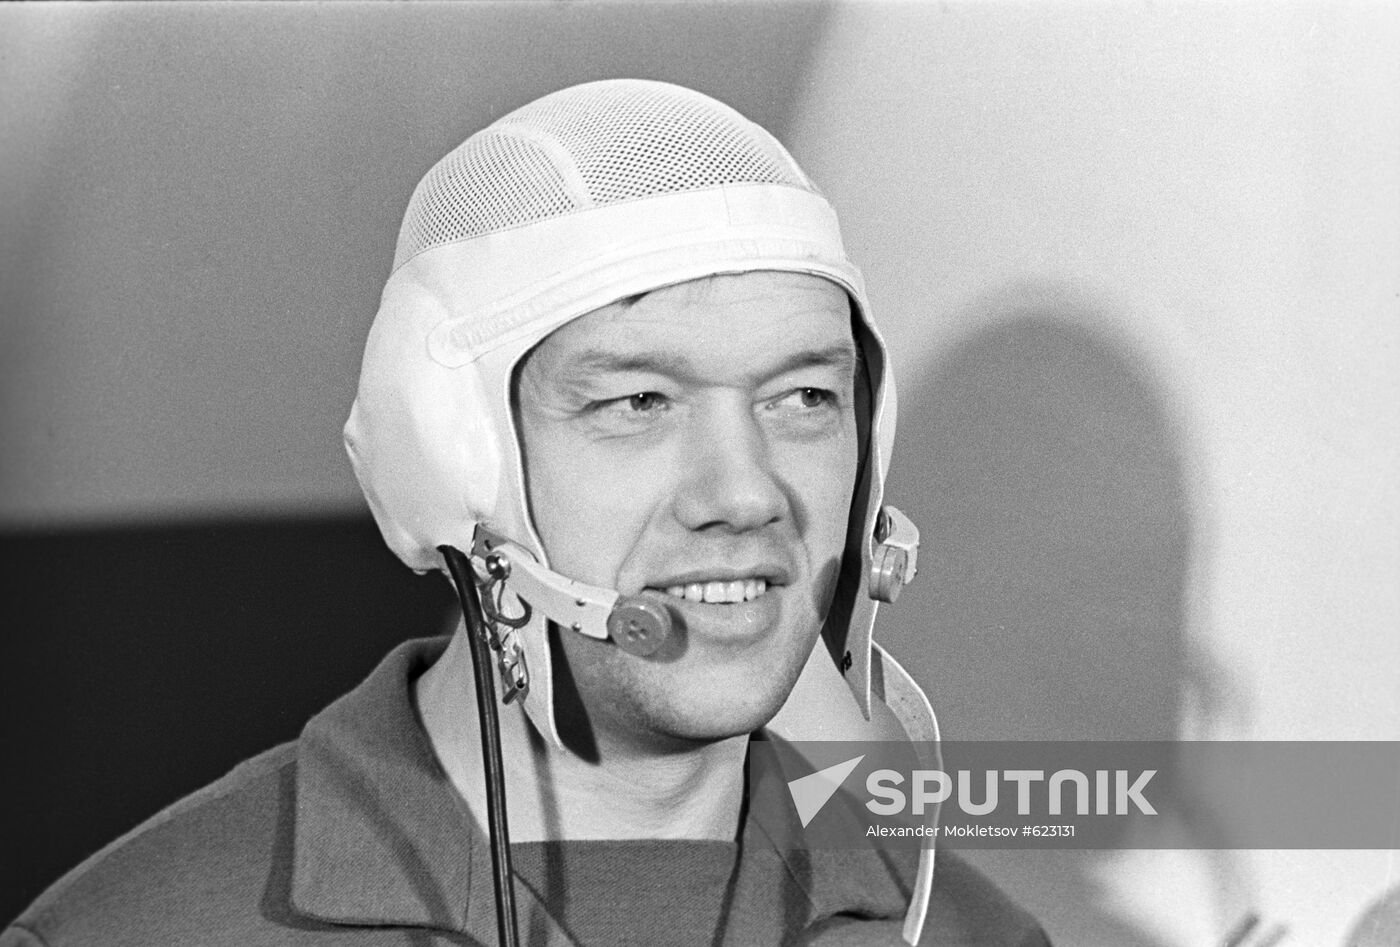 The USSR pilot-cosmonaut Alexey Eliseev